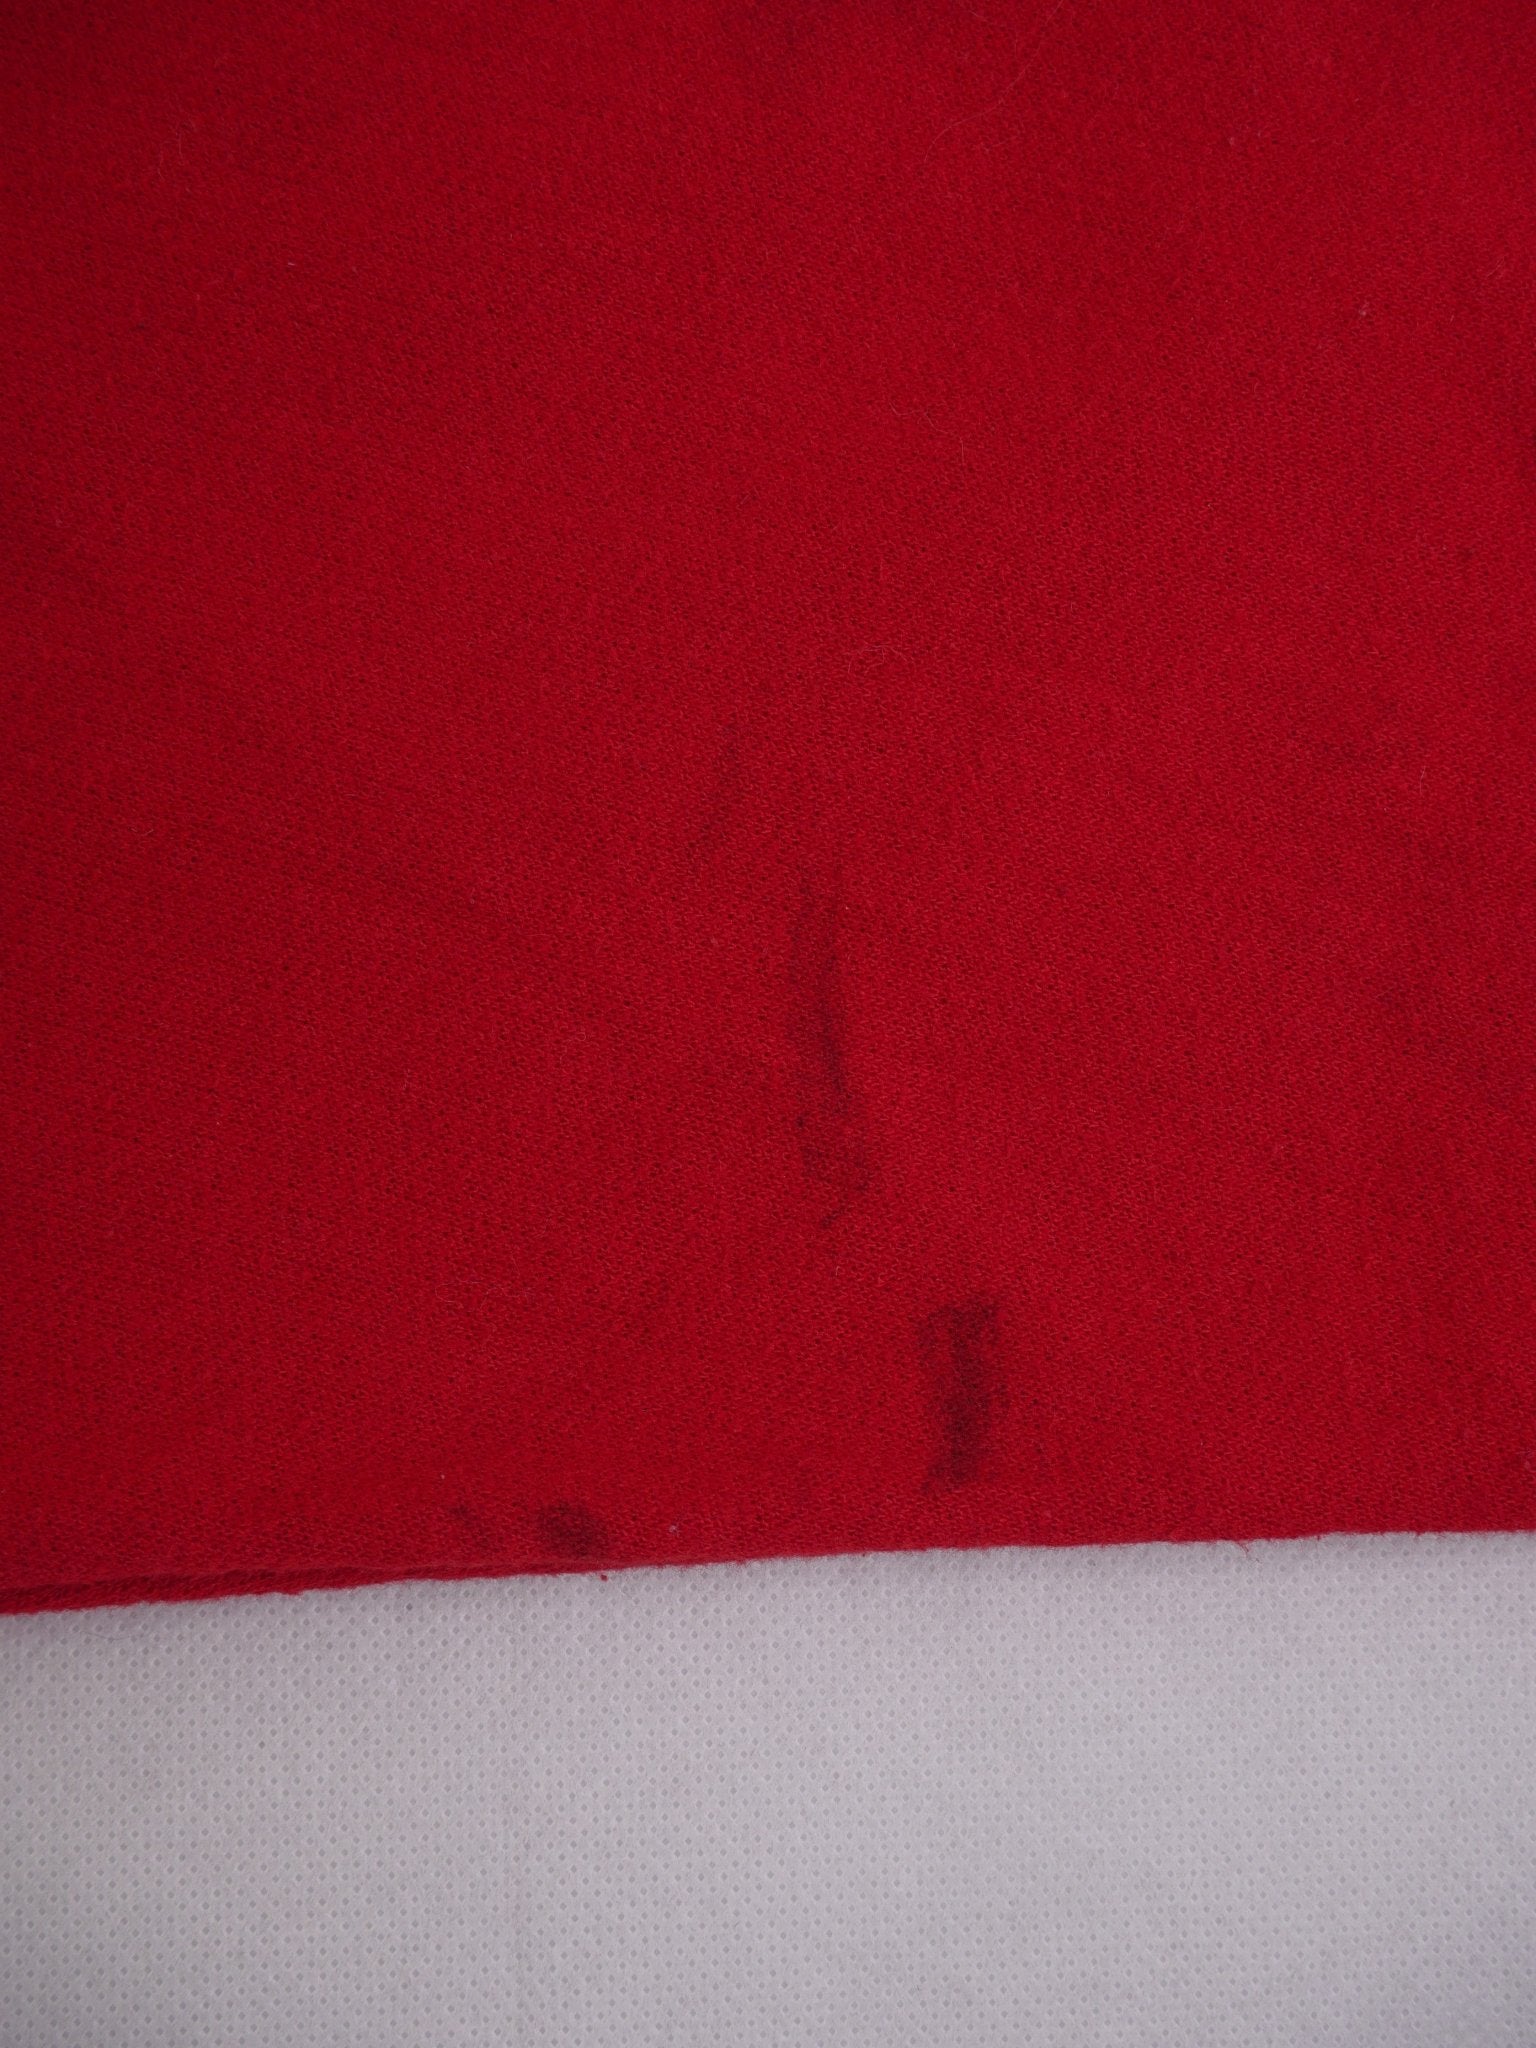 Eagle printed Logo red Sweater - Peeces